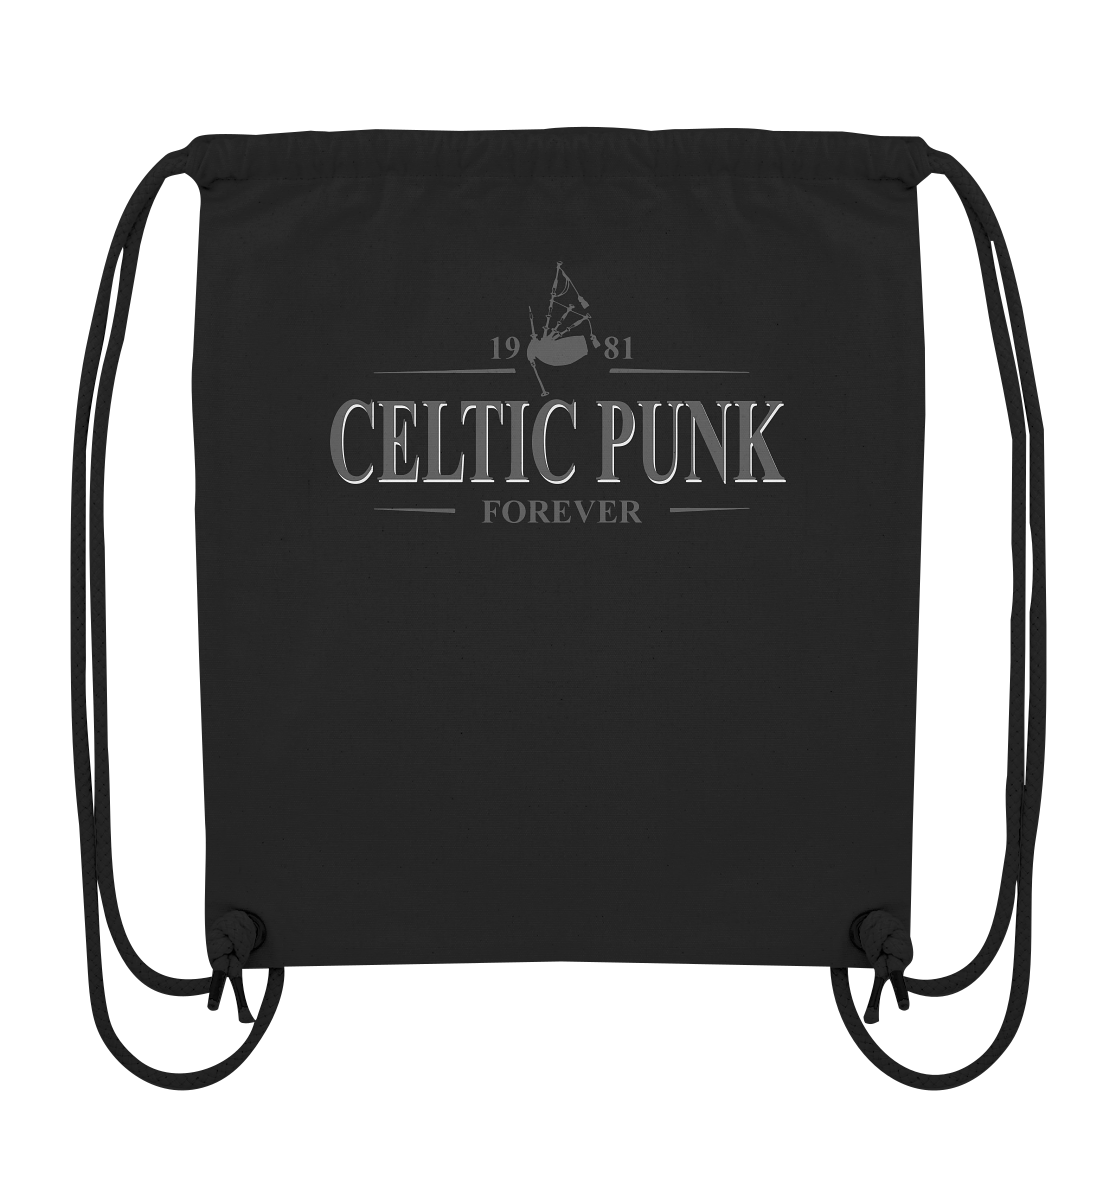 Celtic Punk "Forever" - Organic Gym-Bag